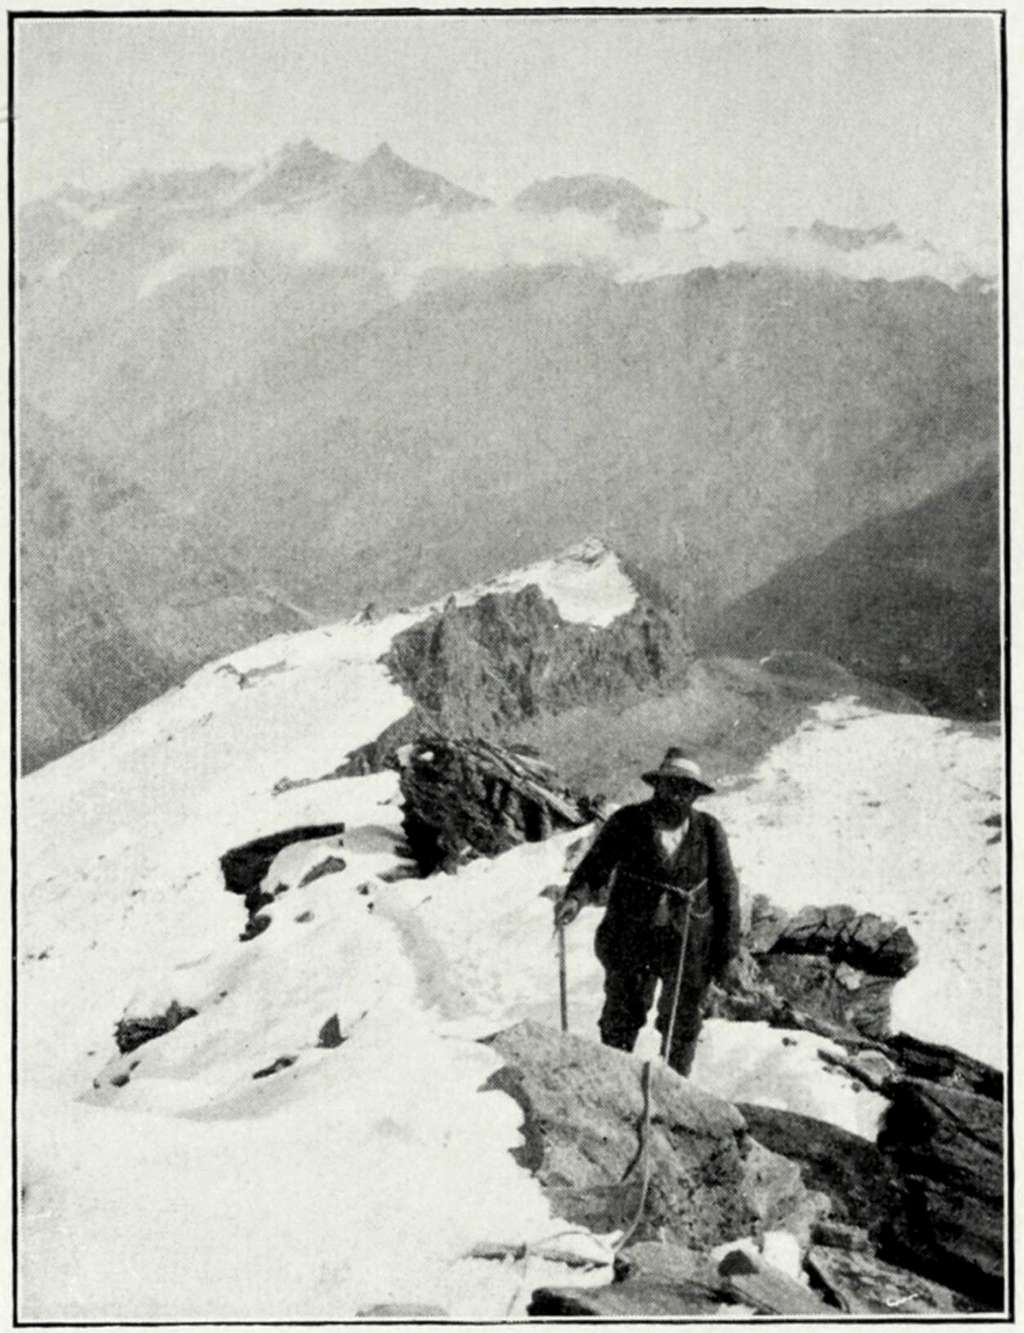 Auguste Gentinetta on the way to the Matterhorn